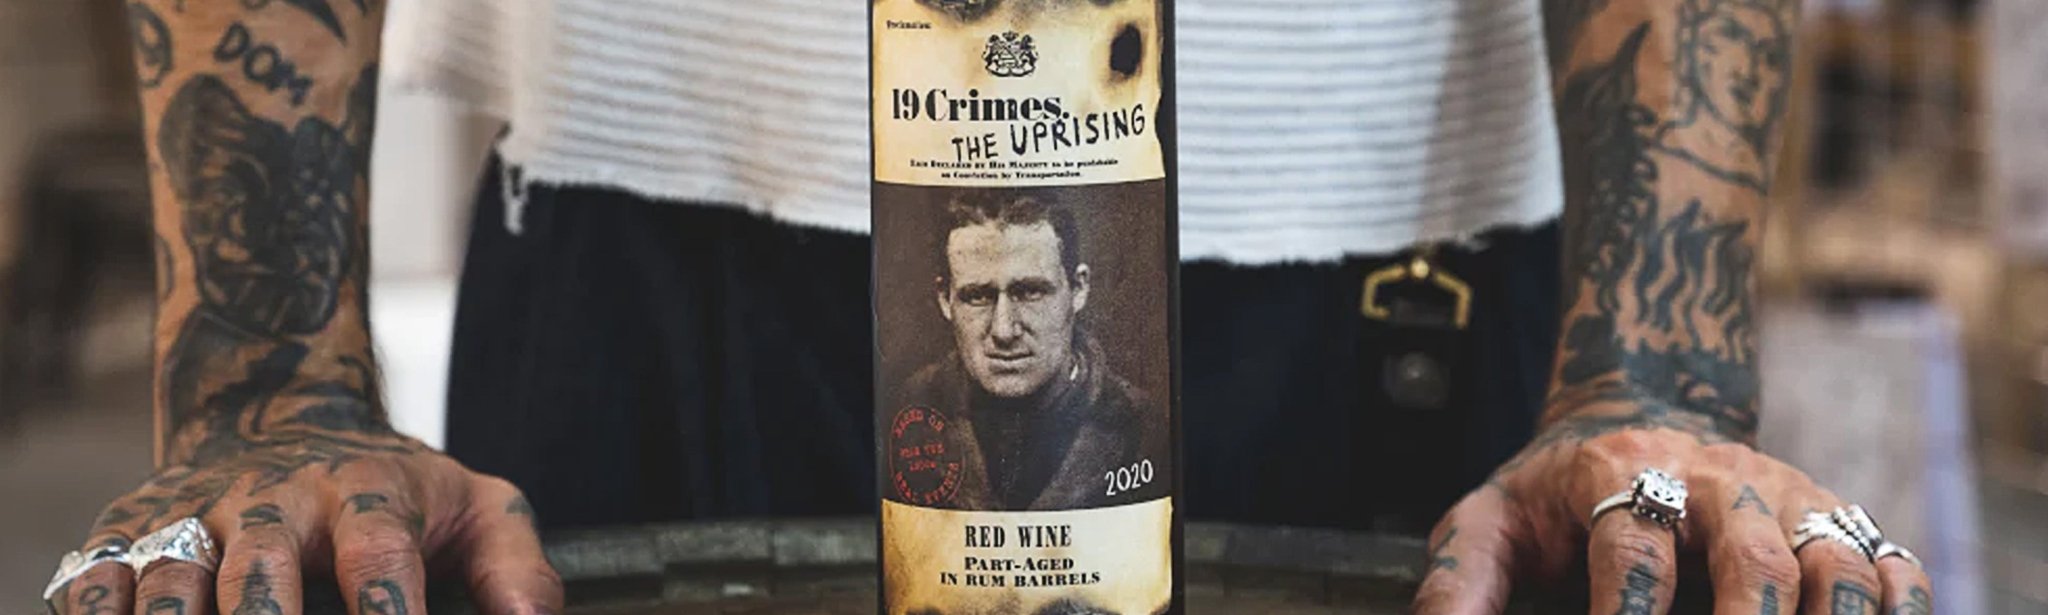 19 crimes - The Bottle Club